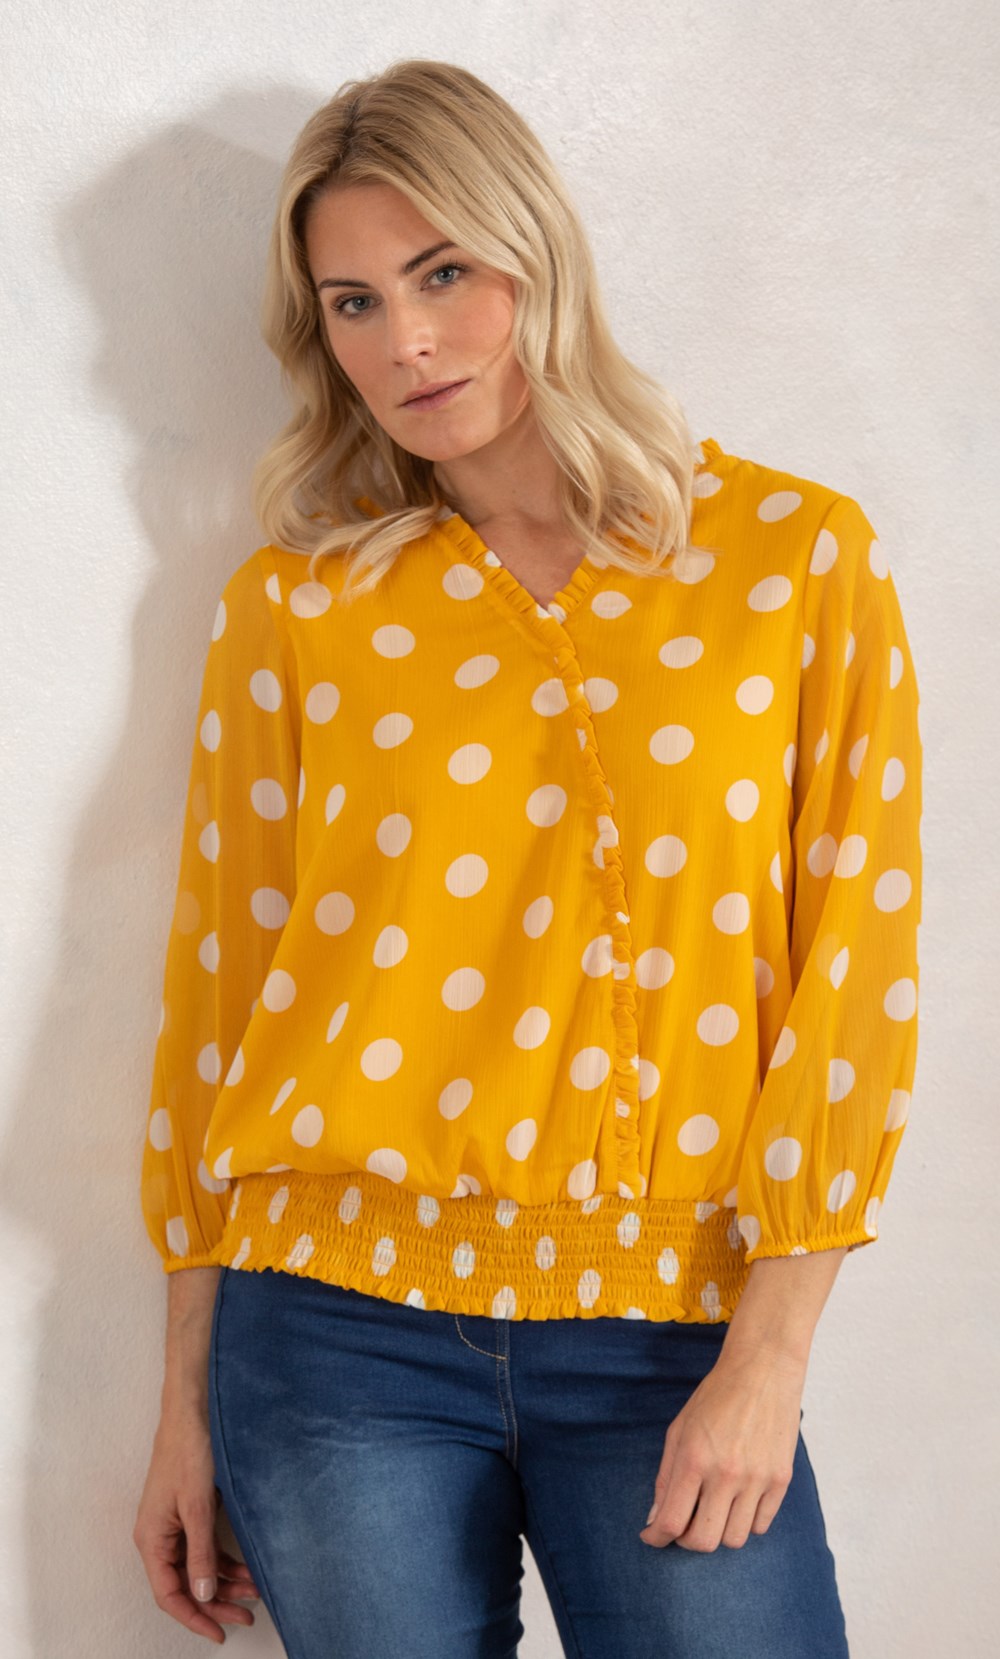 Brands - Klass Crinkle Spot Printed Chiffon Top Mustard/White Women’s